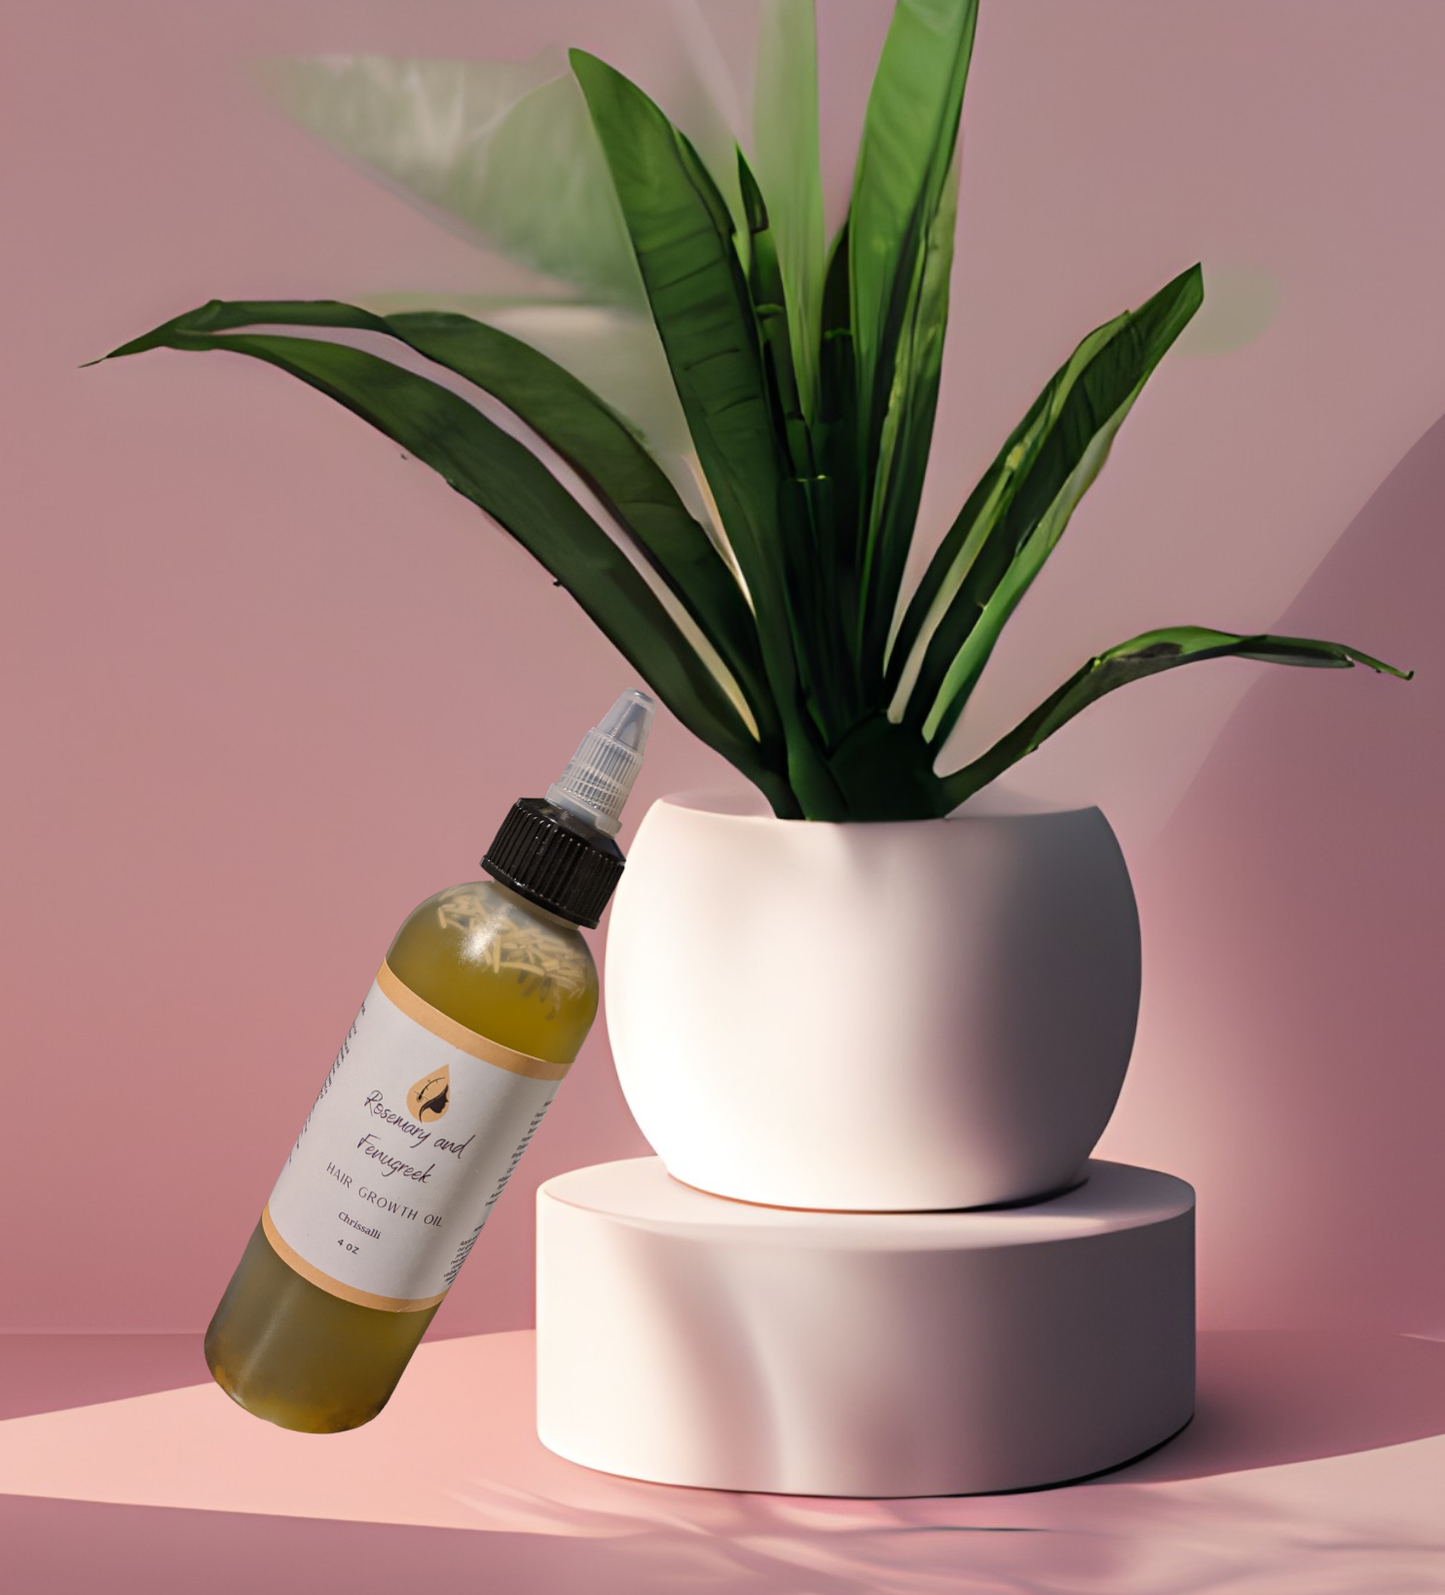 Rosemary and fenugreek hair growth oil